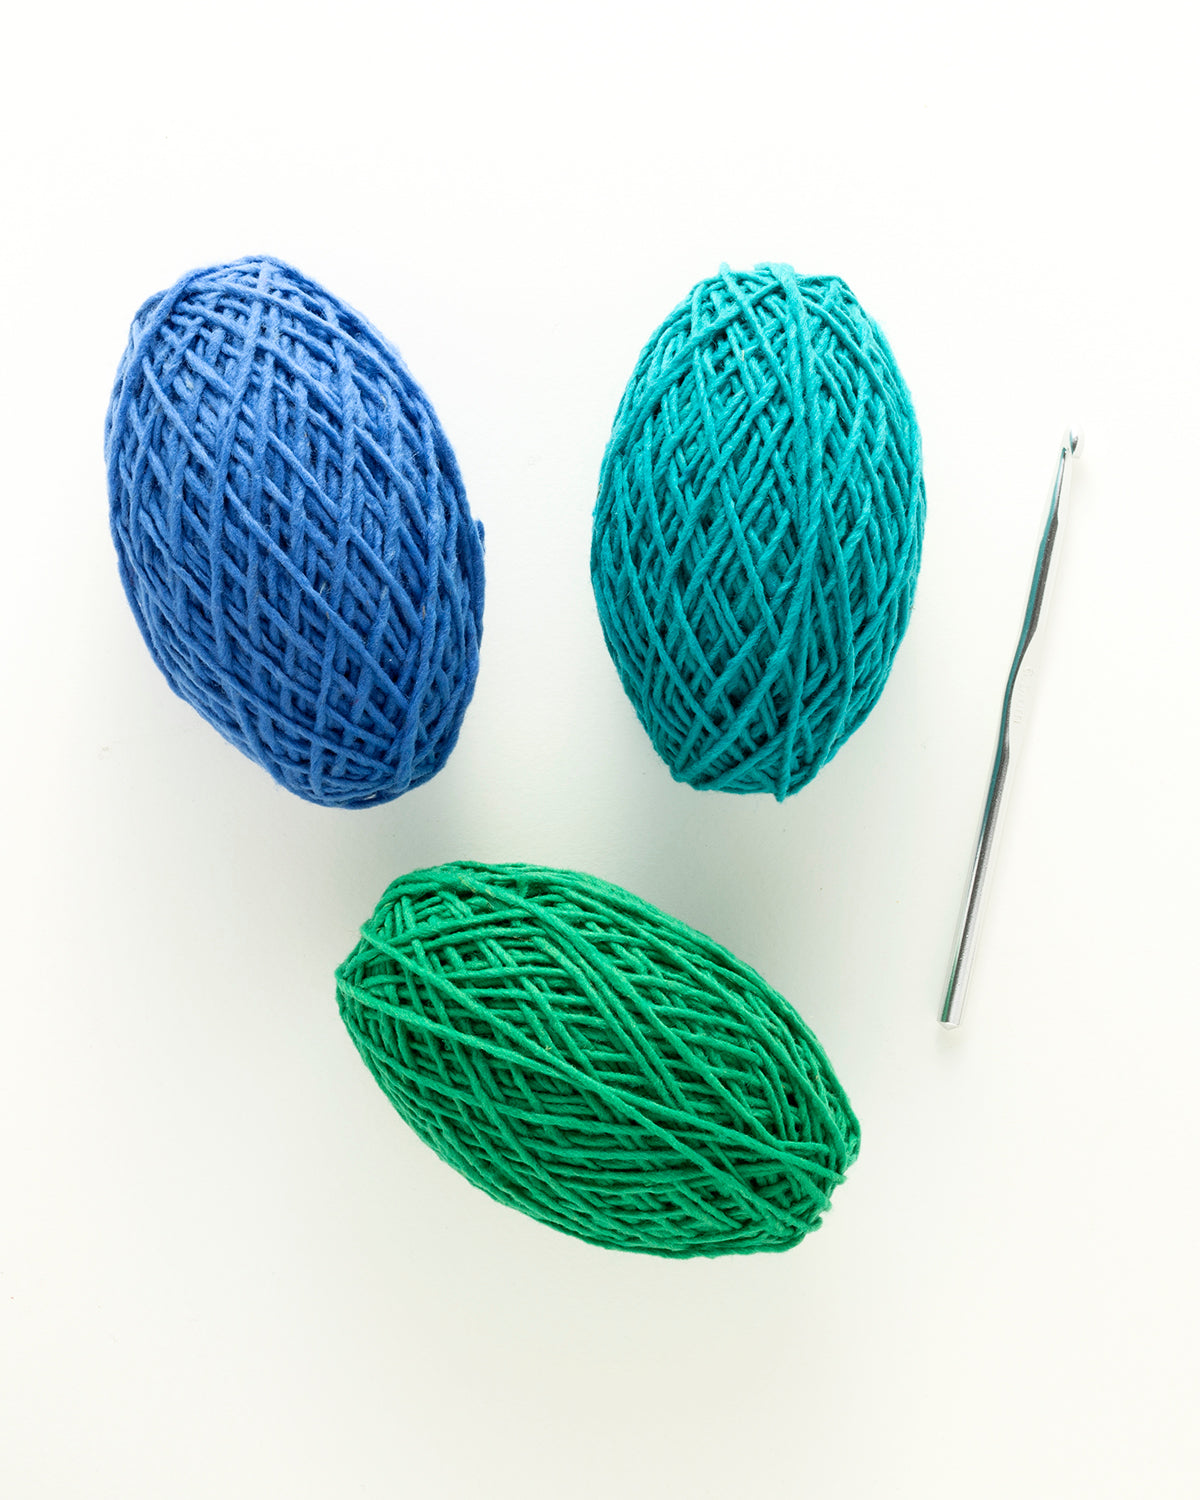 Explore Crochet: Bunting Kit – Ocean